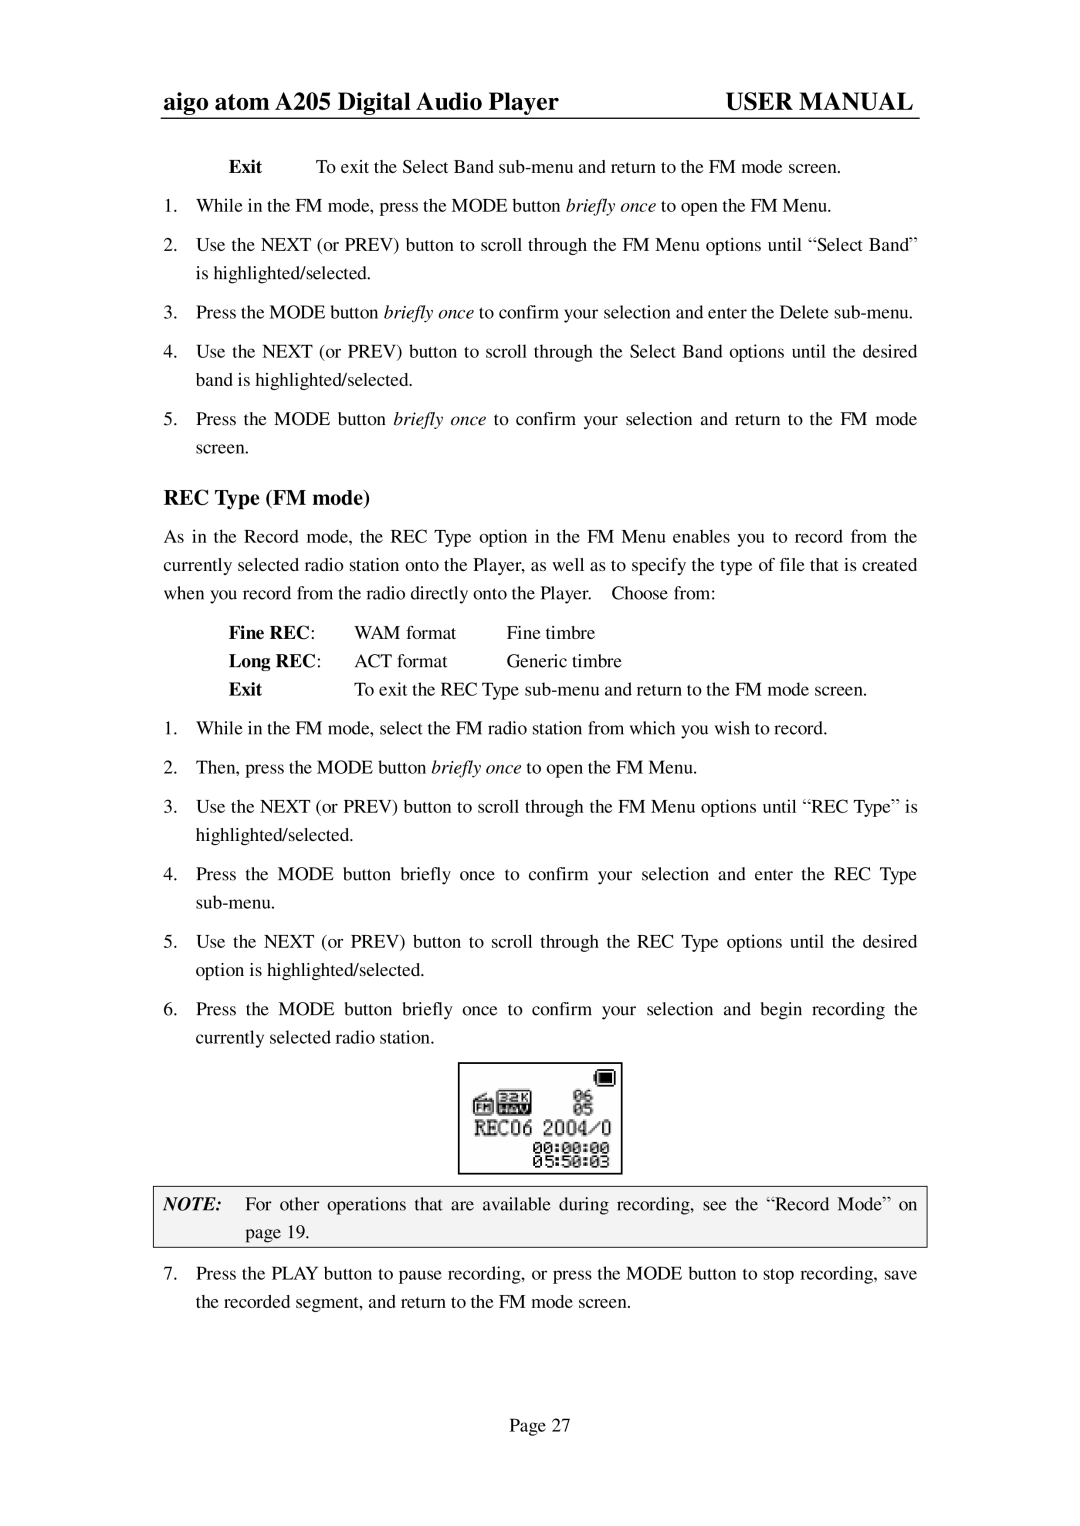 Aigo atom A205 user manual REC Type FM mode, Fine REC, Long REC 